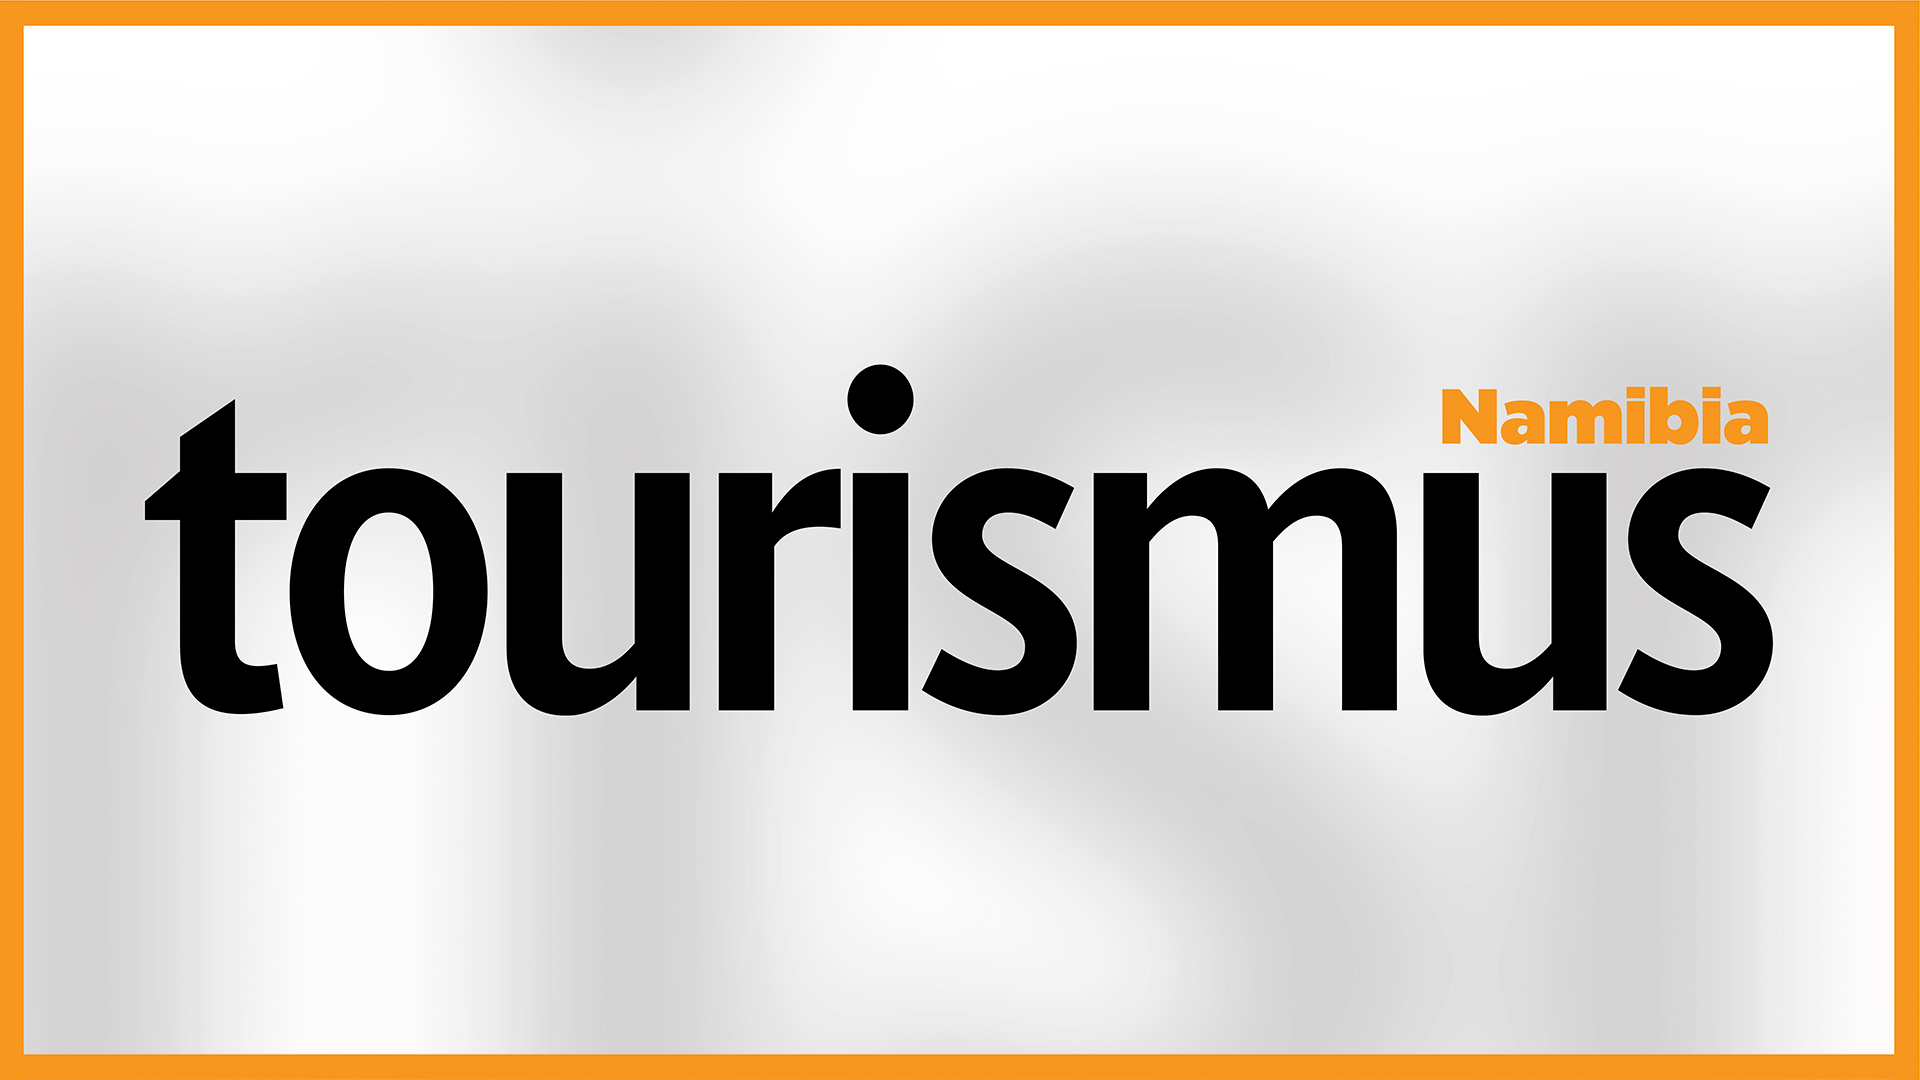 Tourismus Namibia (English) - 2 October 2021